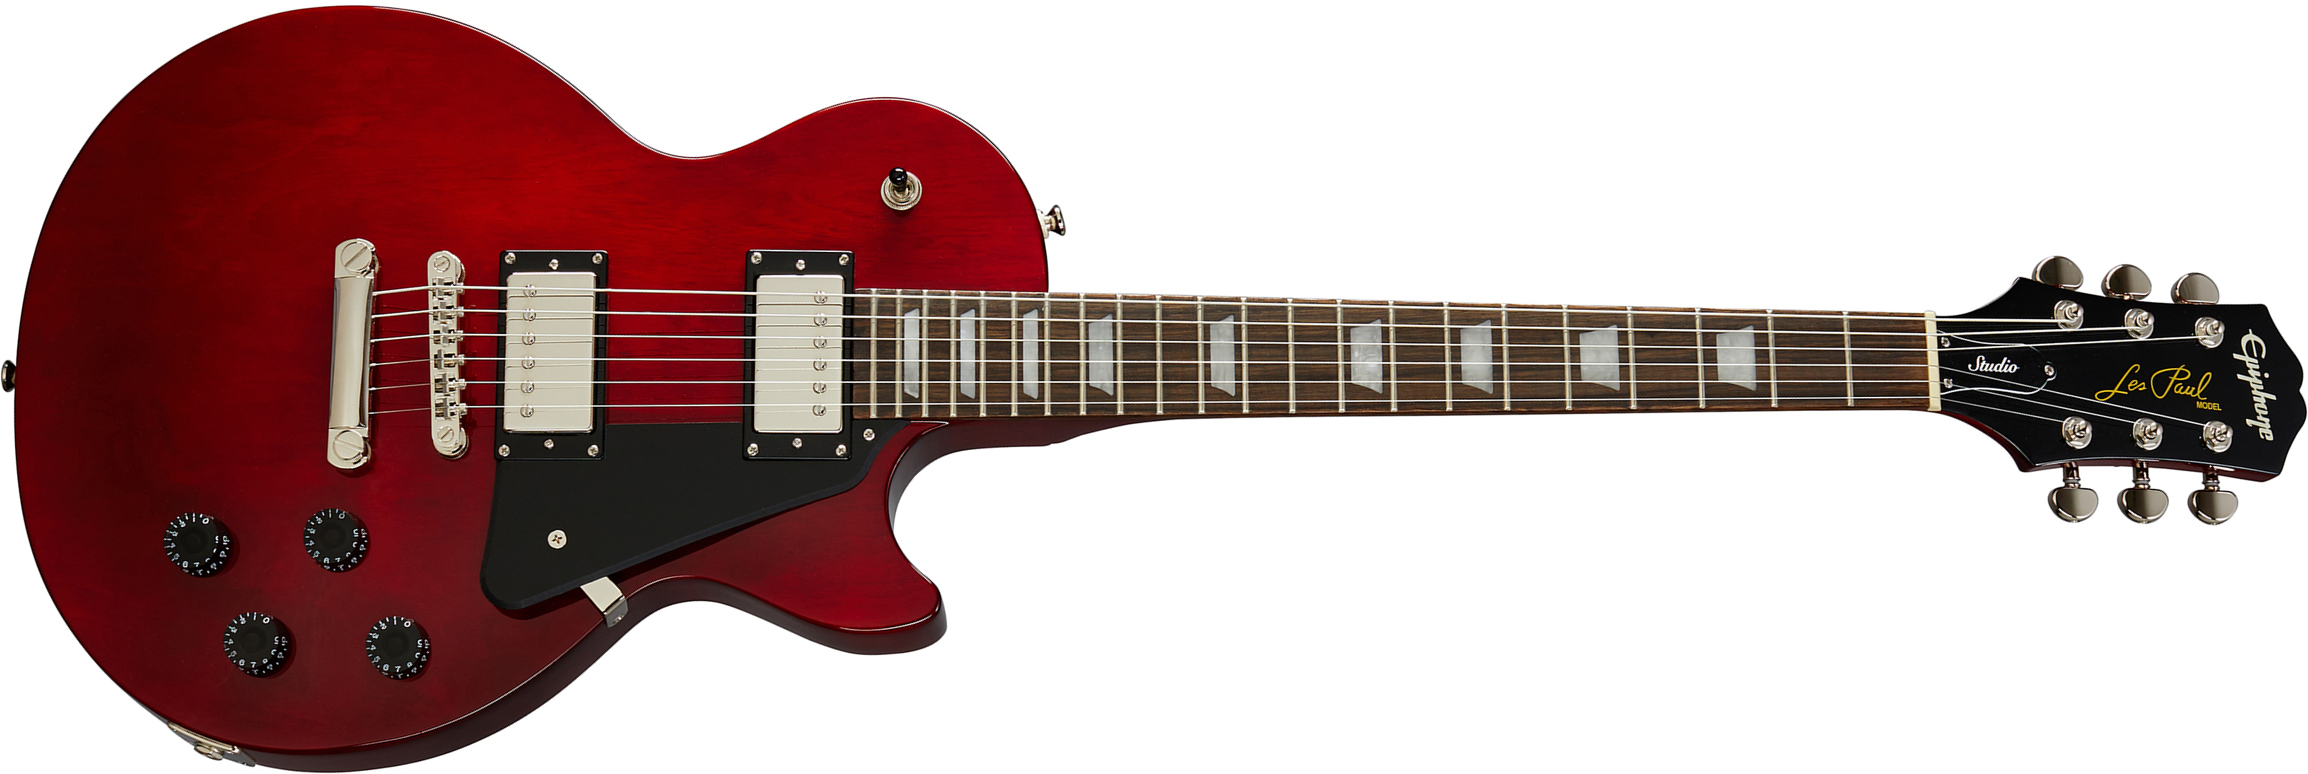 Epiphone Les Paul Studio 2h Ht Pf - Wine Red - Single cut electric guitar - Main picture